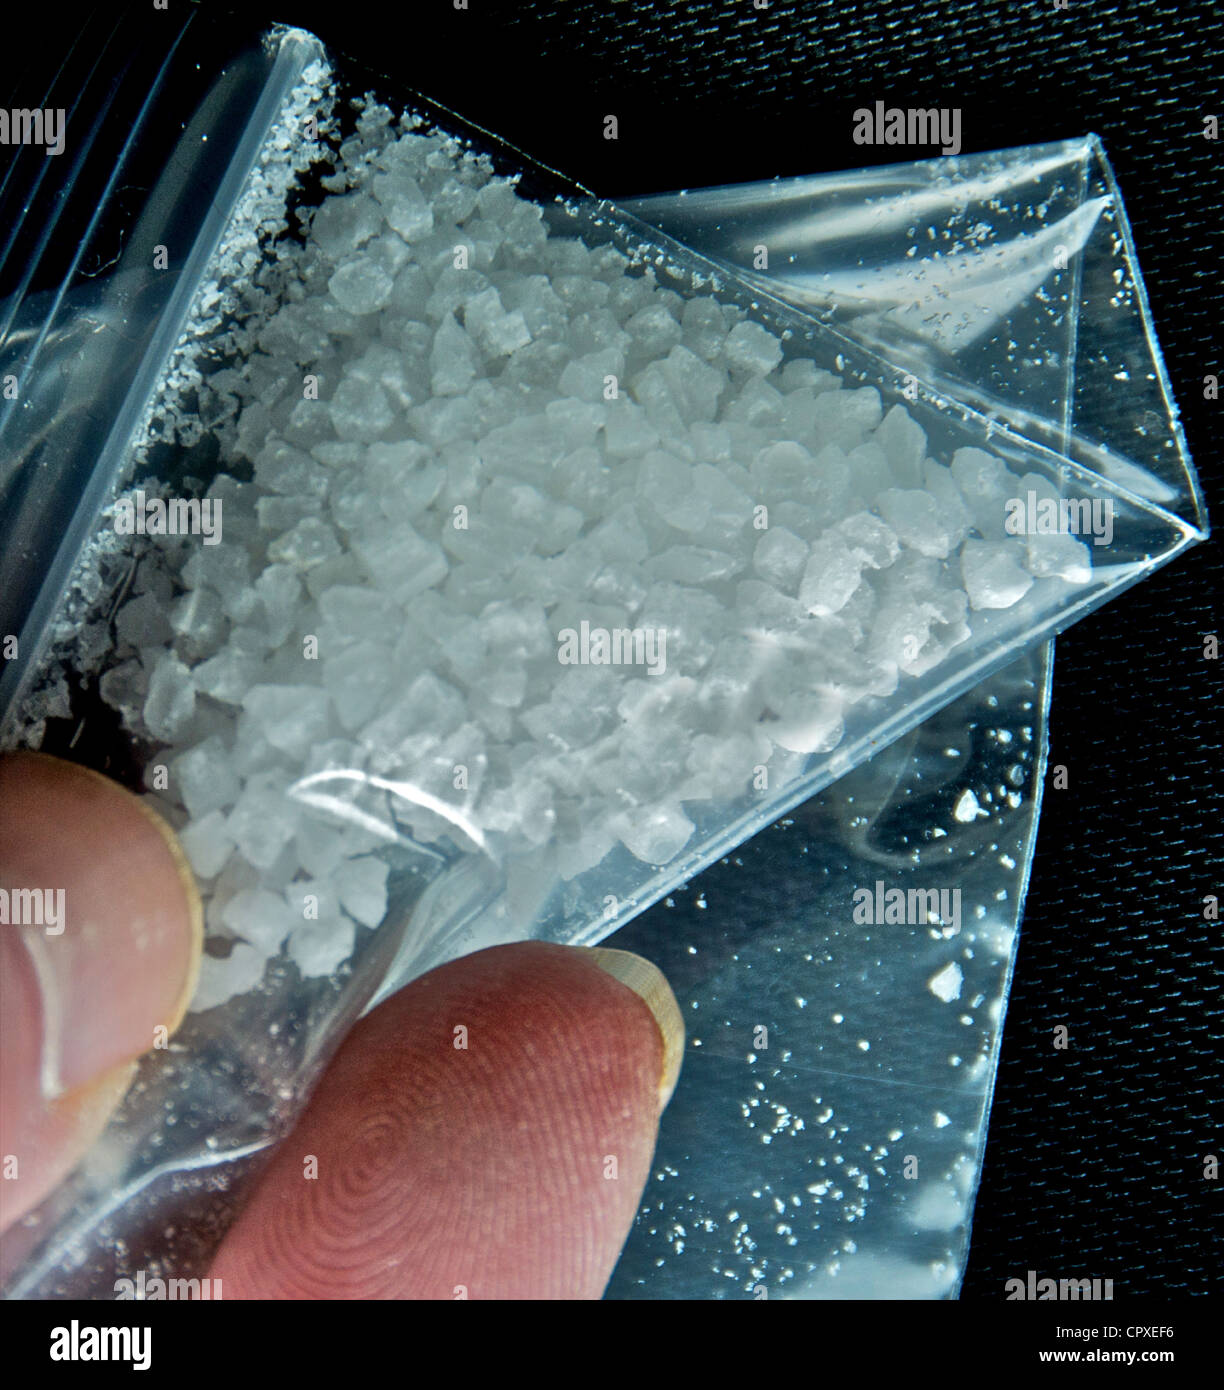 Crystal meth - methamphetamine - illegal narcotic drug Stock Photo